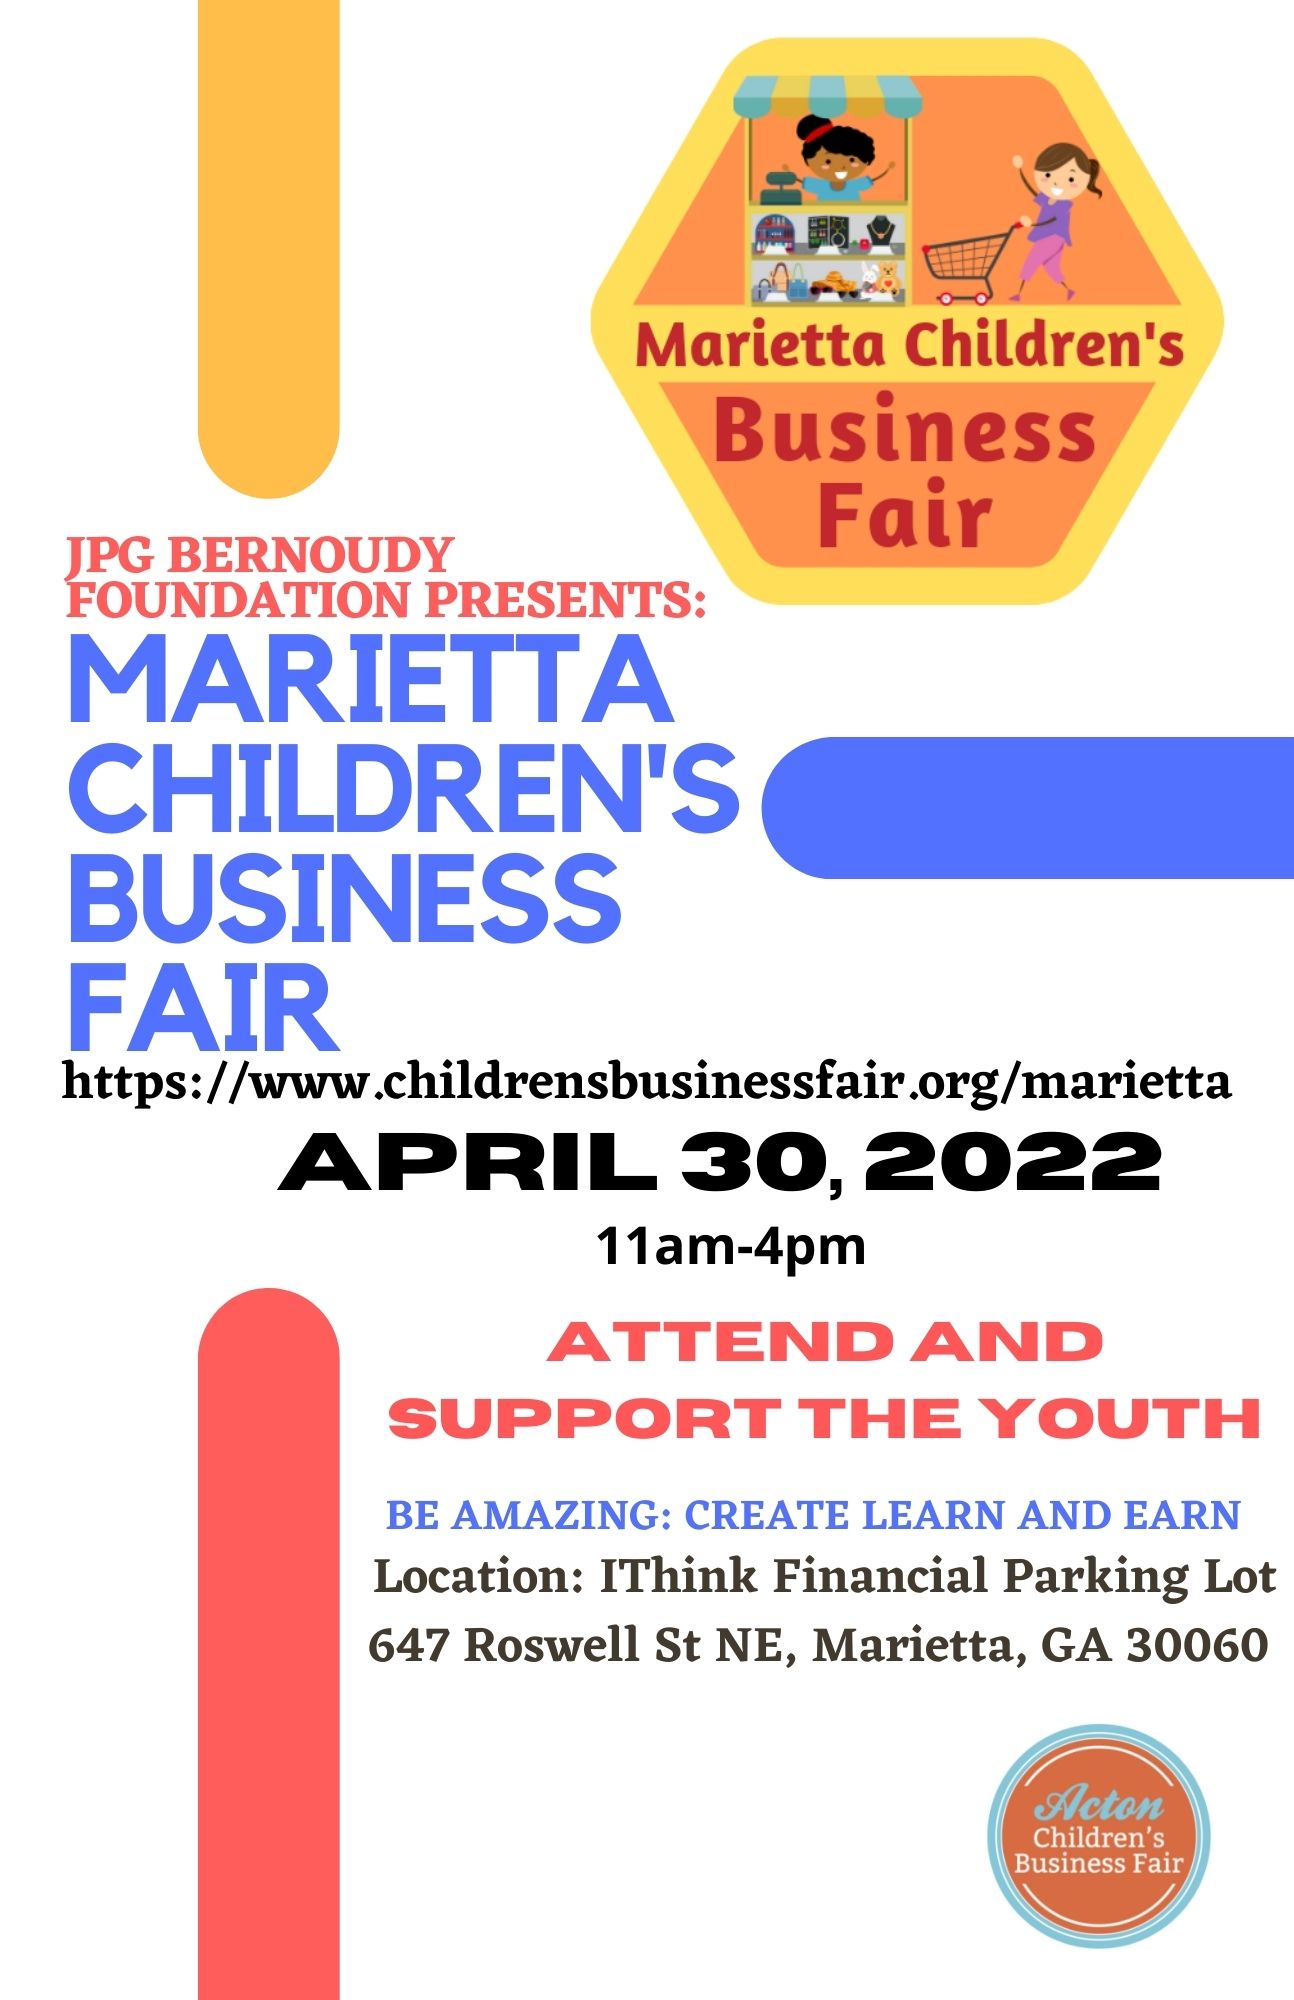 Marietta Children’s Business Fair